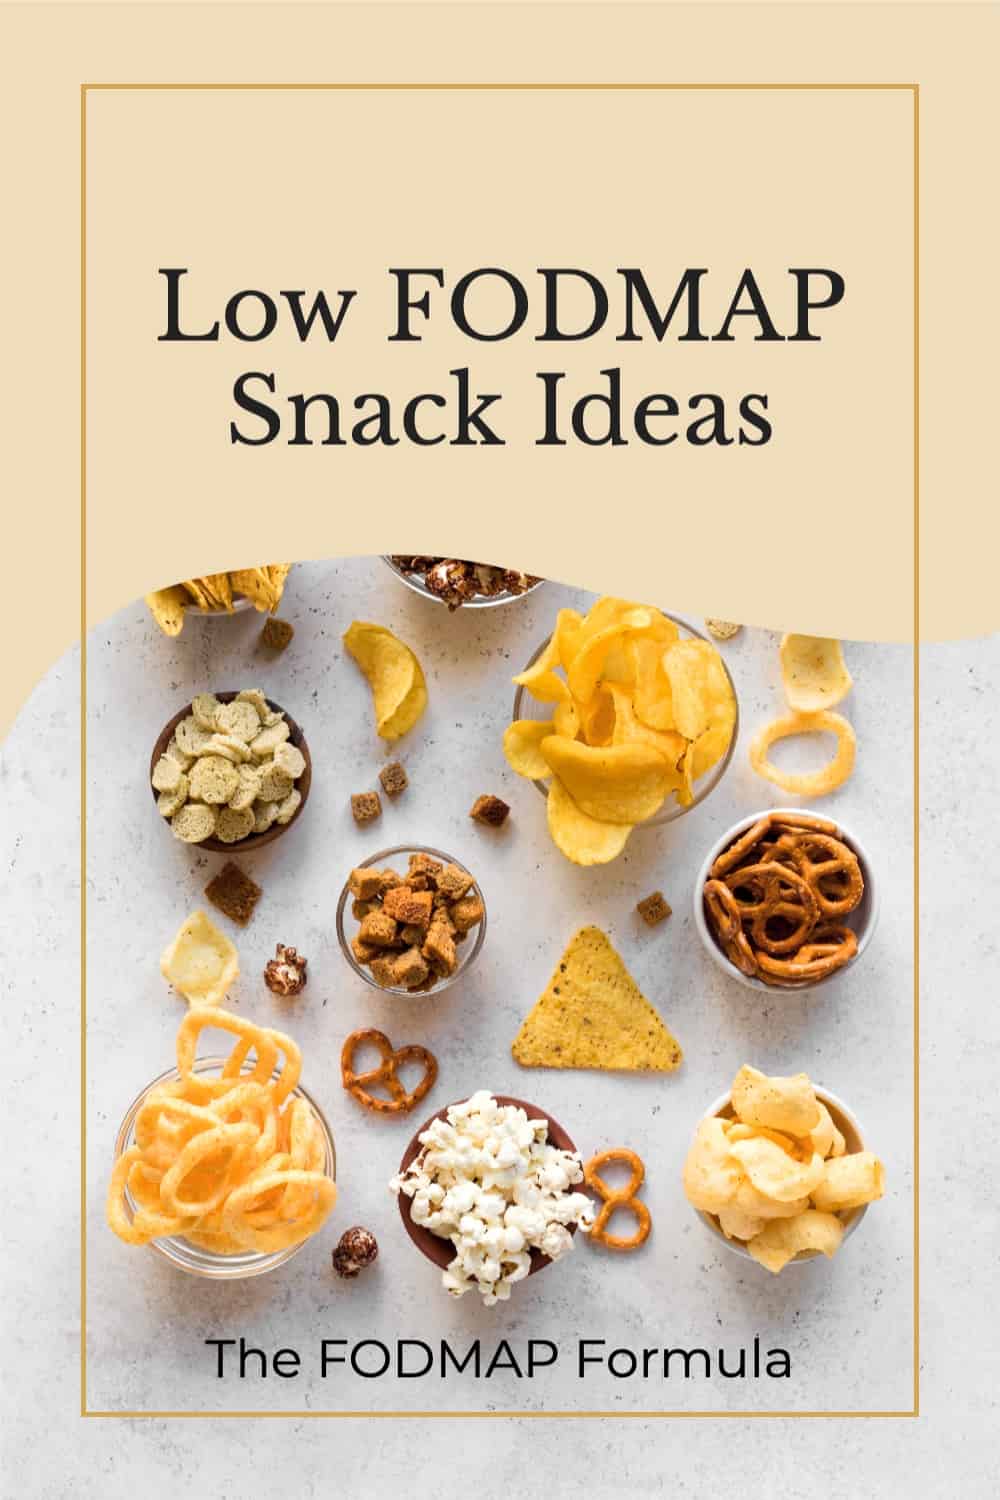 Low FODMAP Snack Ideas - The FODMAP Formula